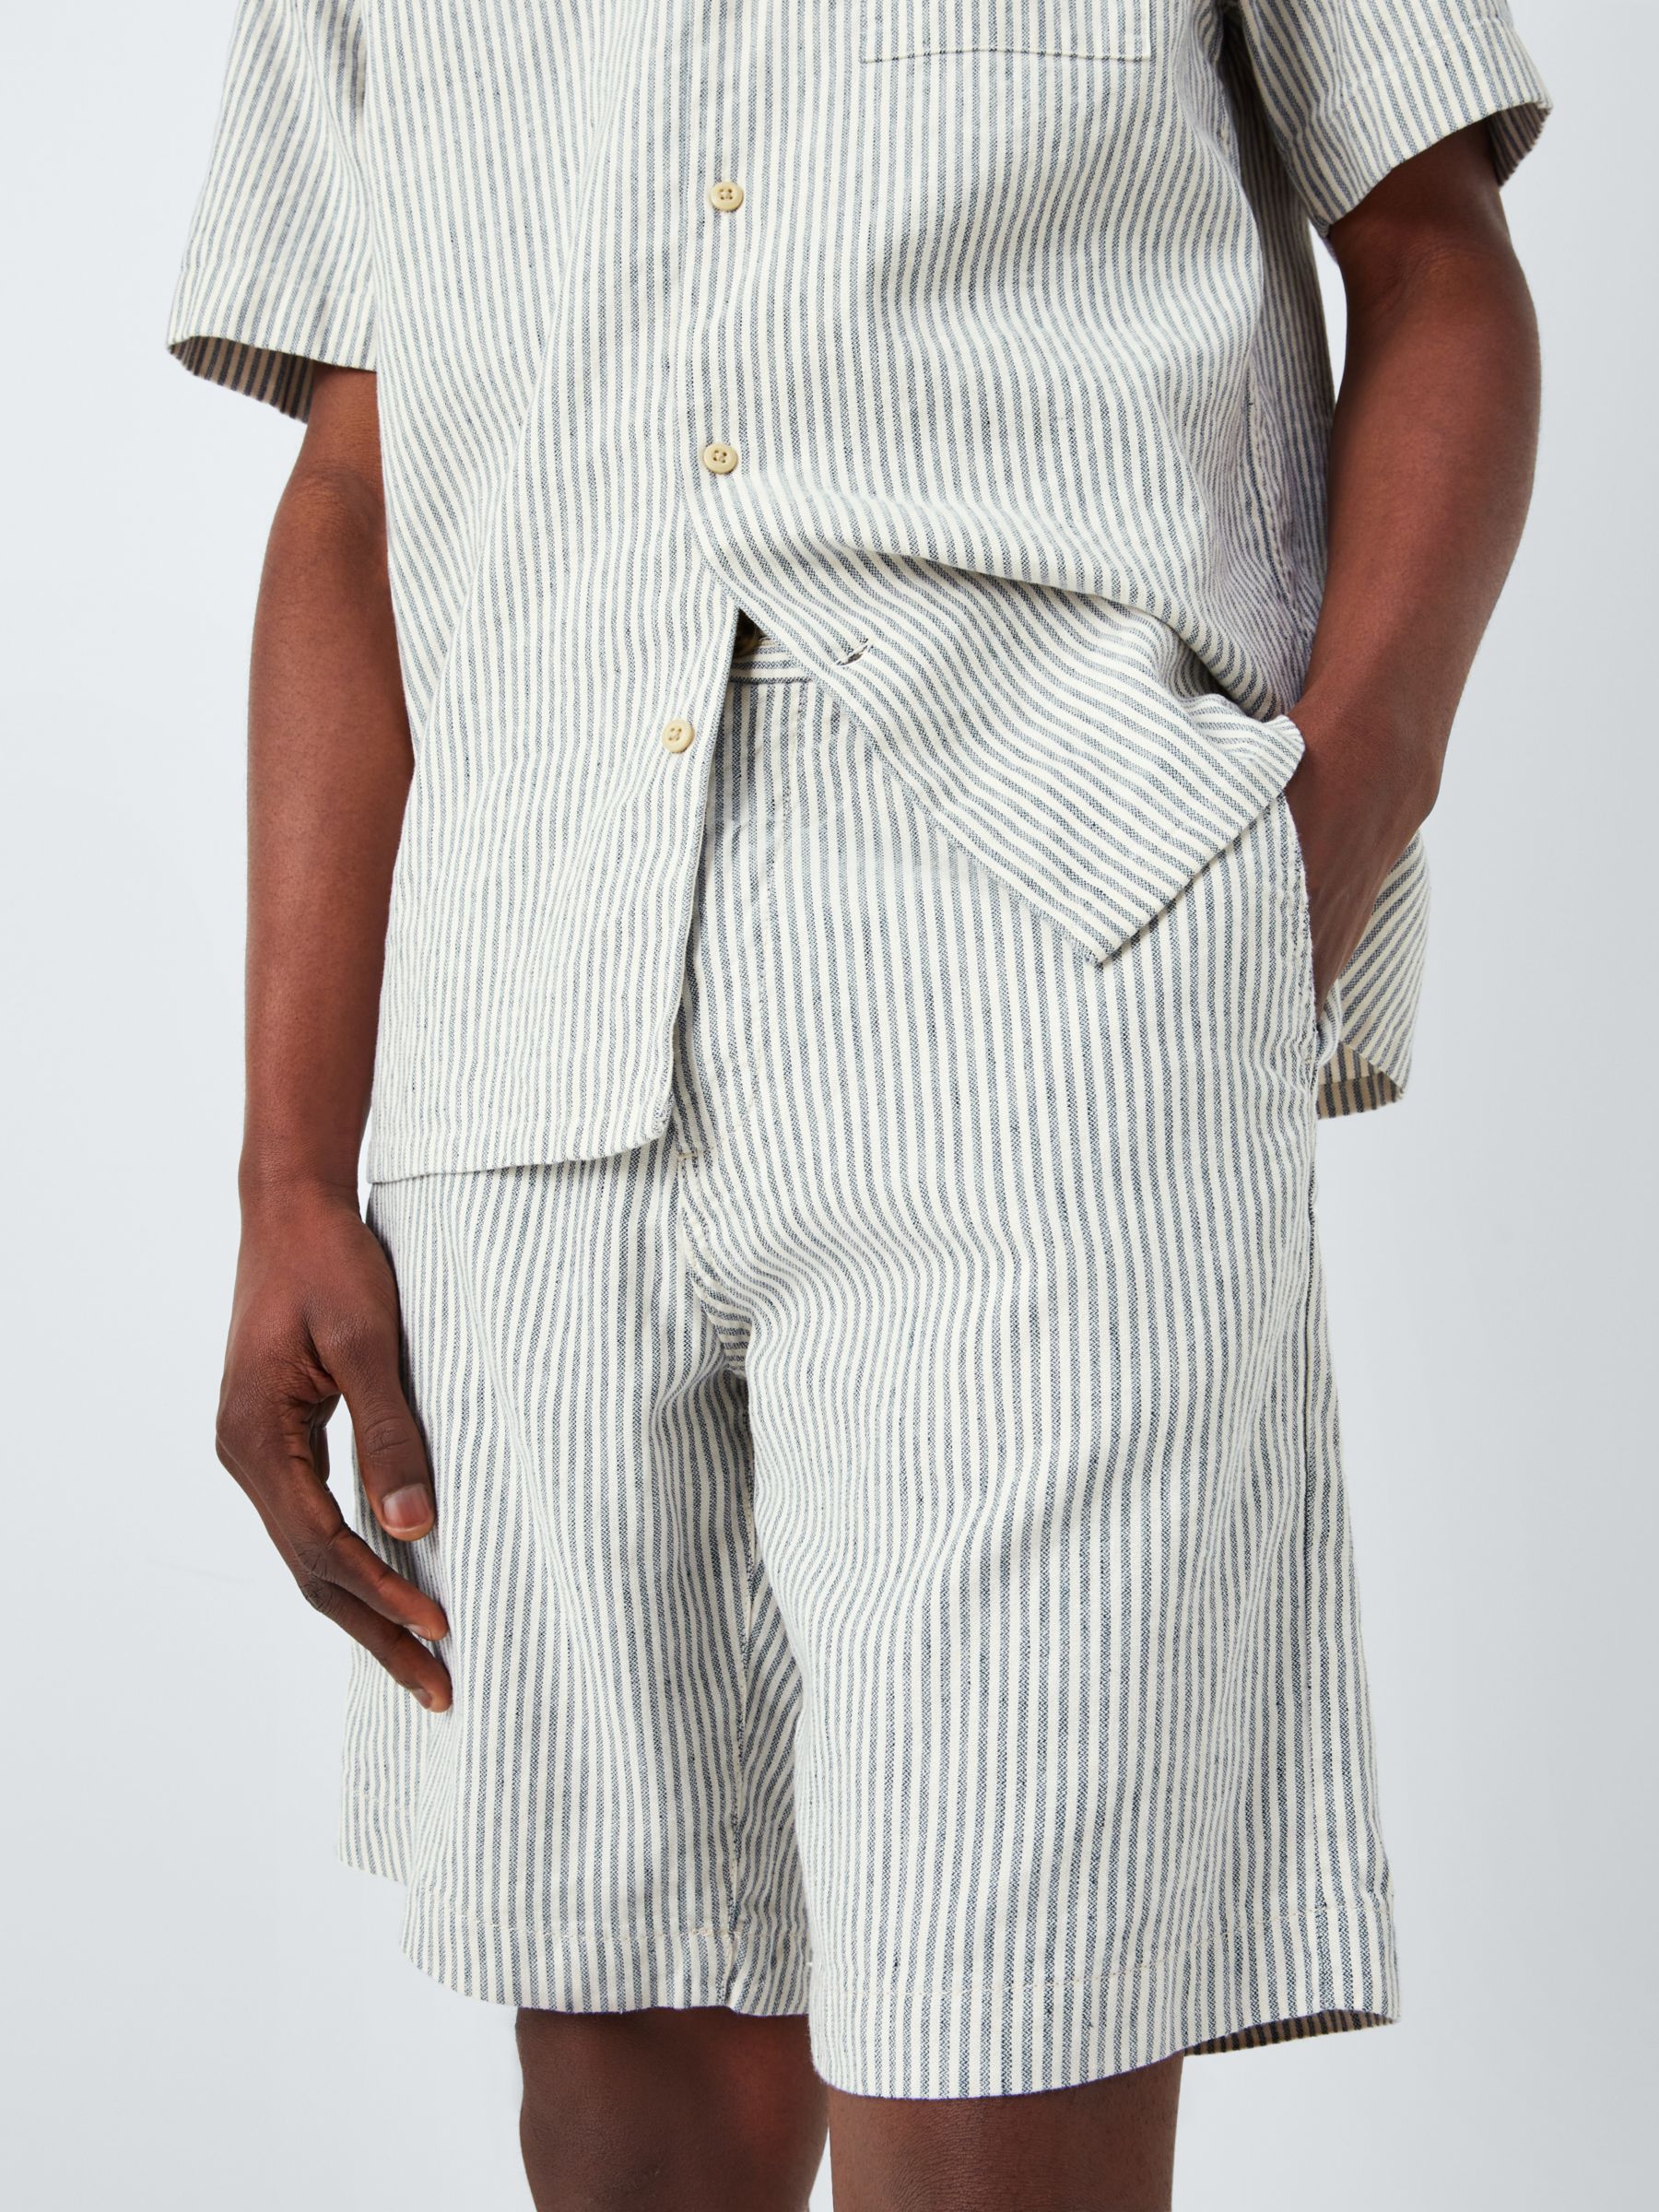 Buy John Lewis Linen Blend Stripe Shorts, Navy/White Online at johnlewis.com